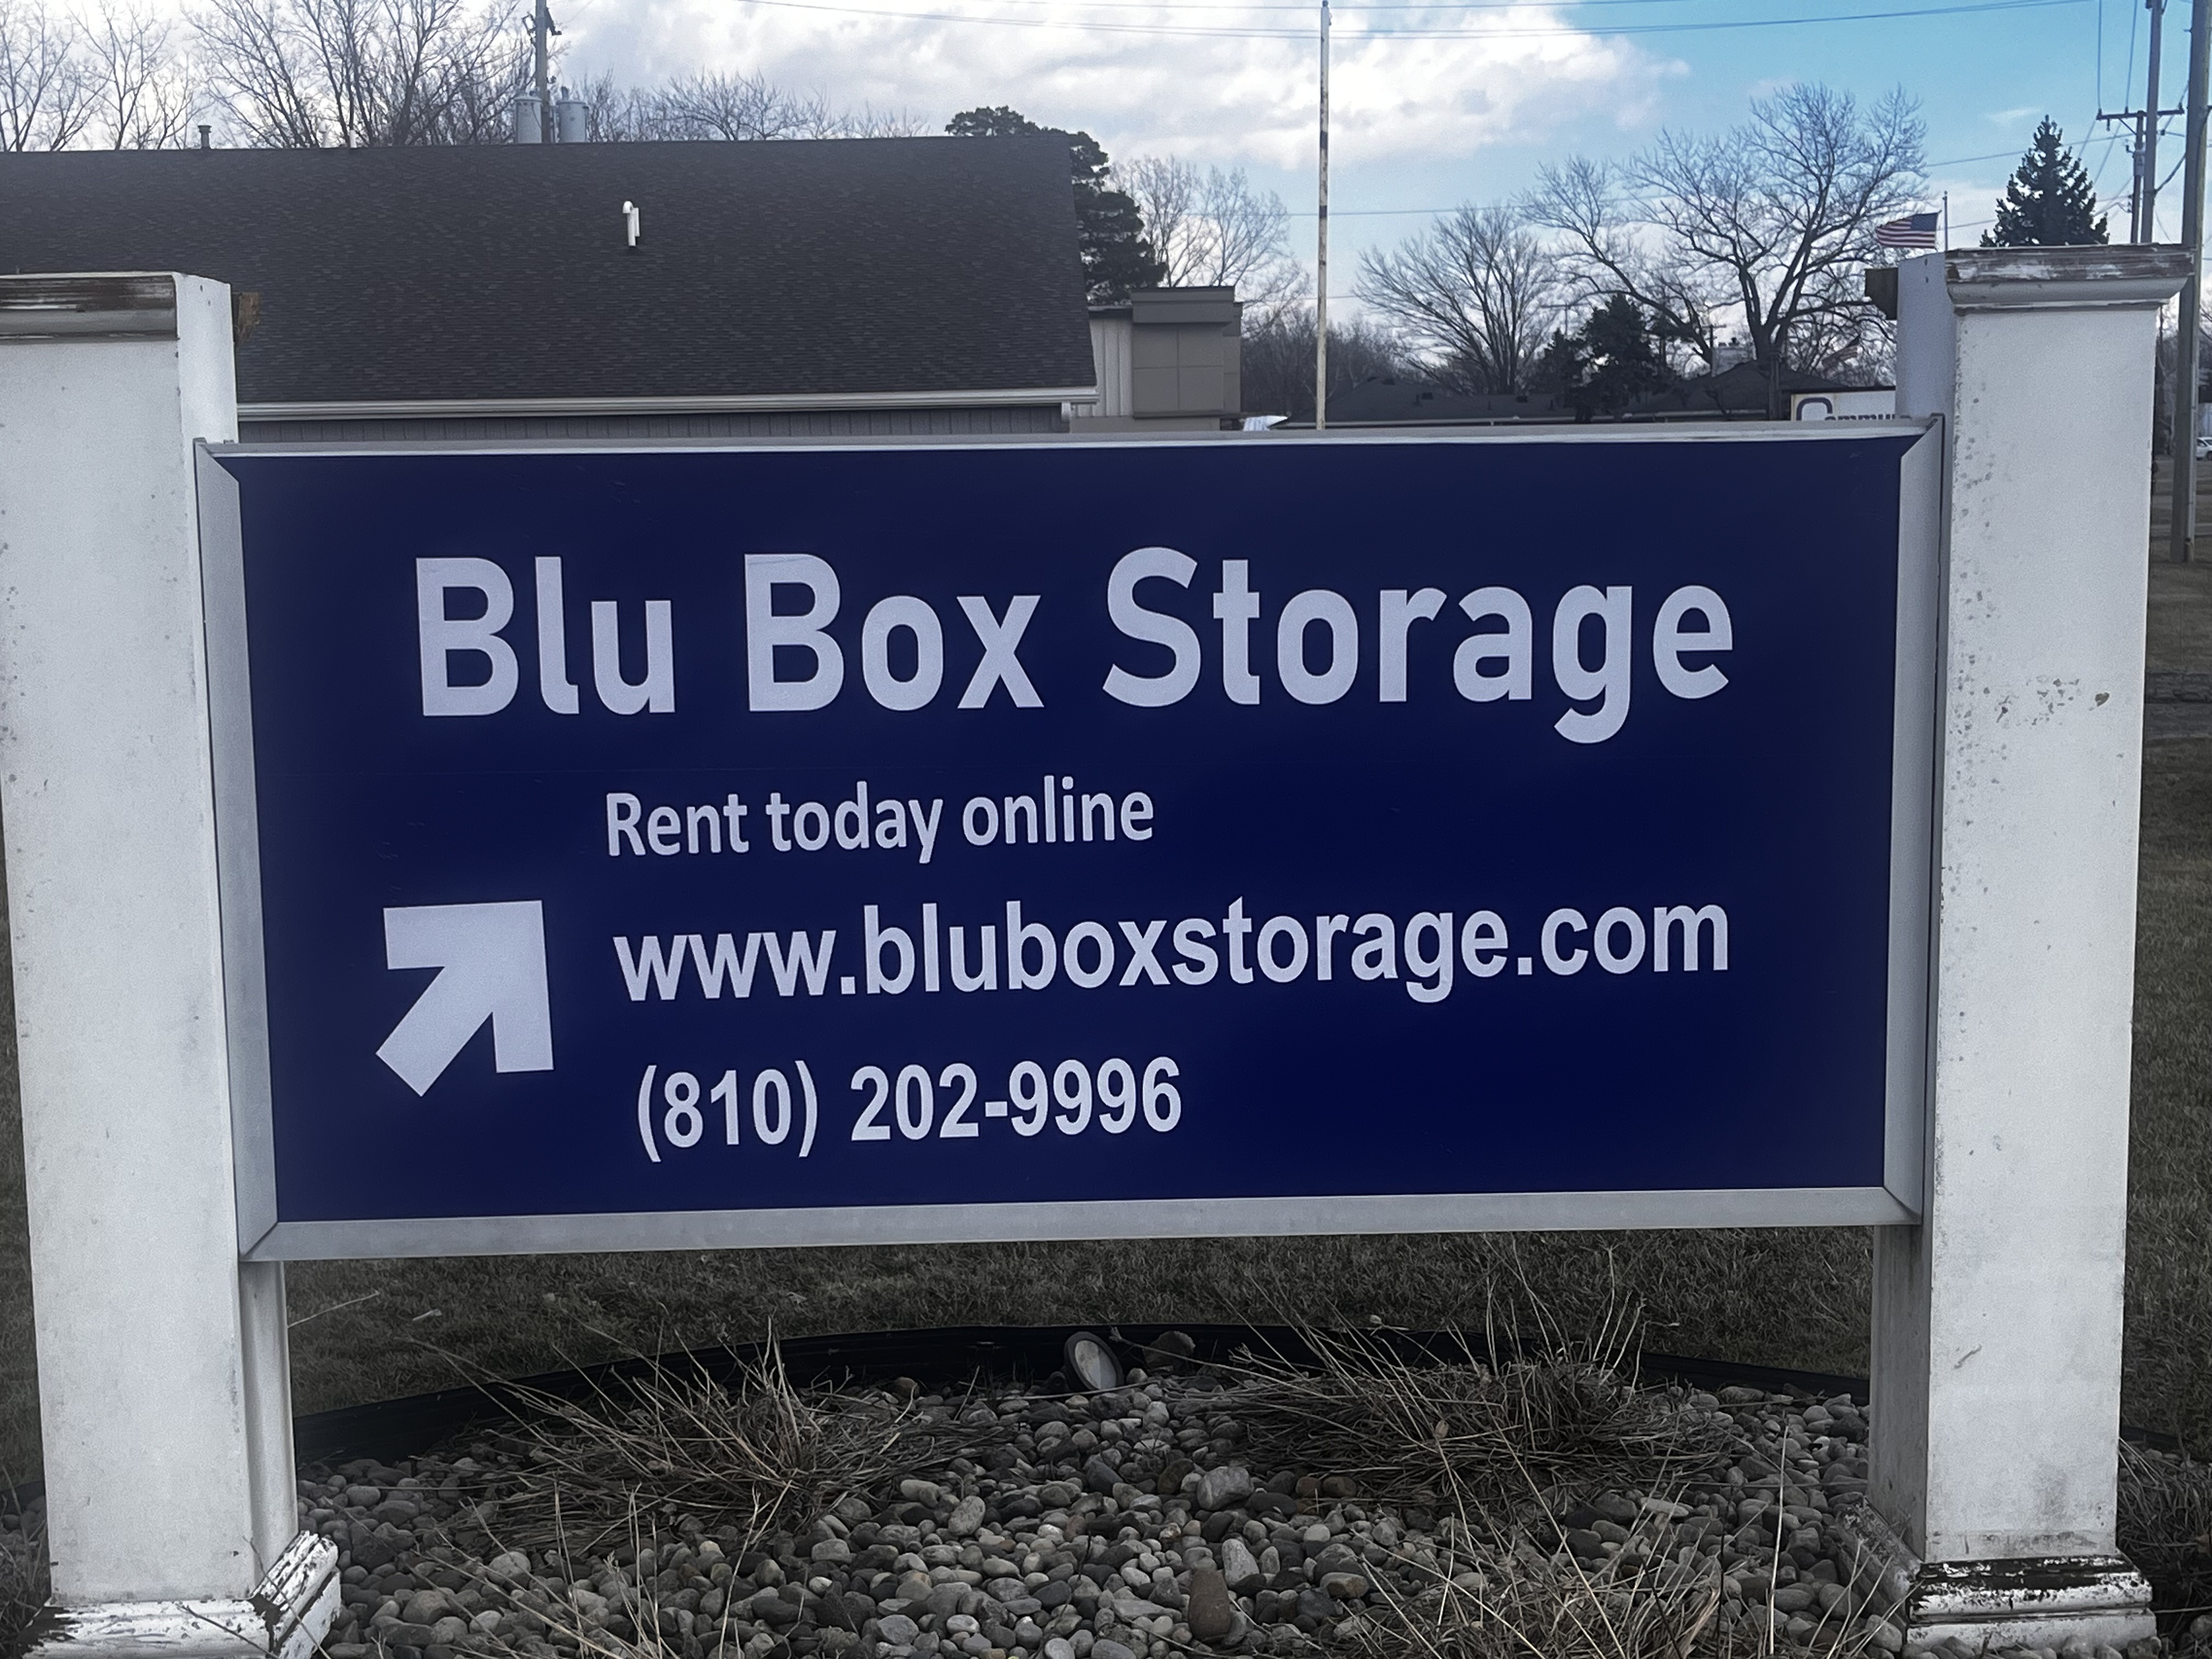 Blu Box Storage in Marine City, MI 48039